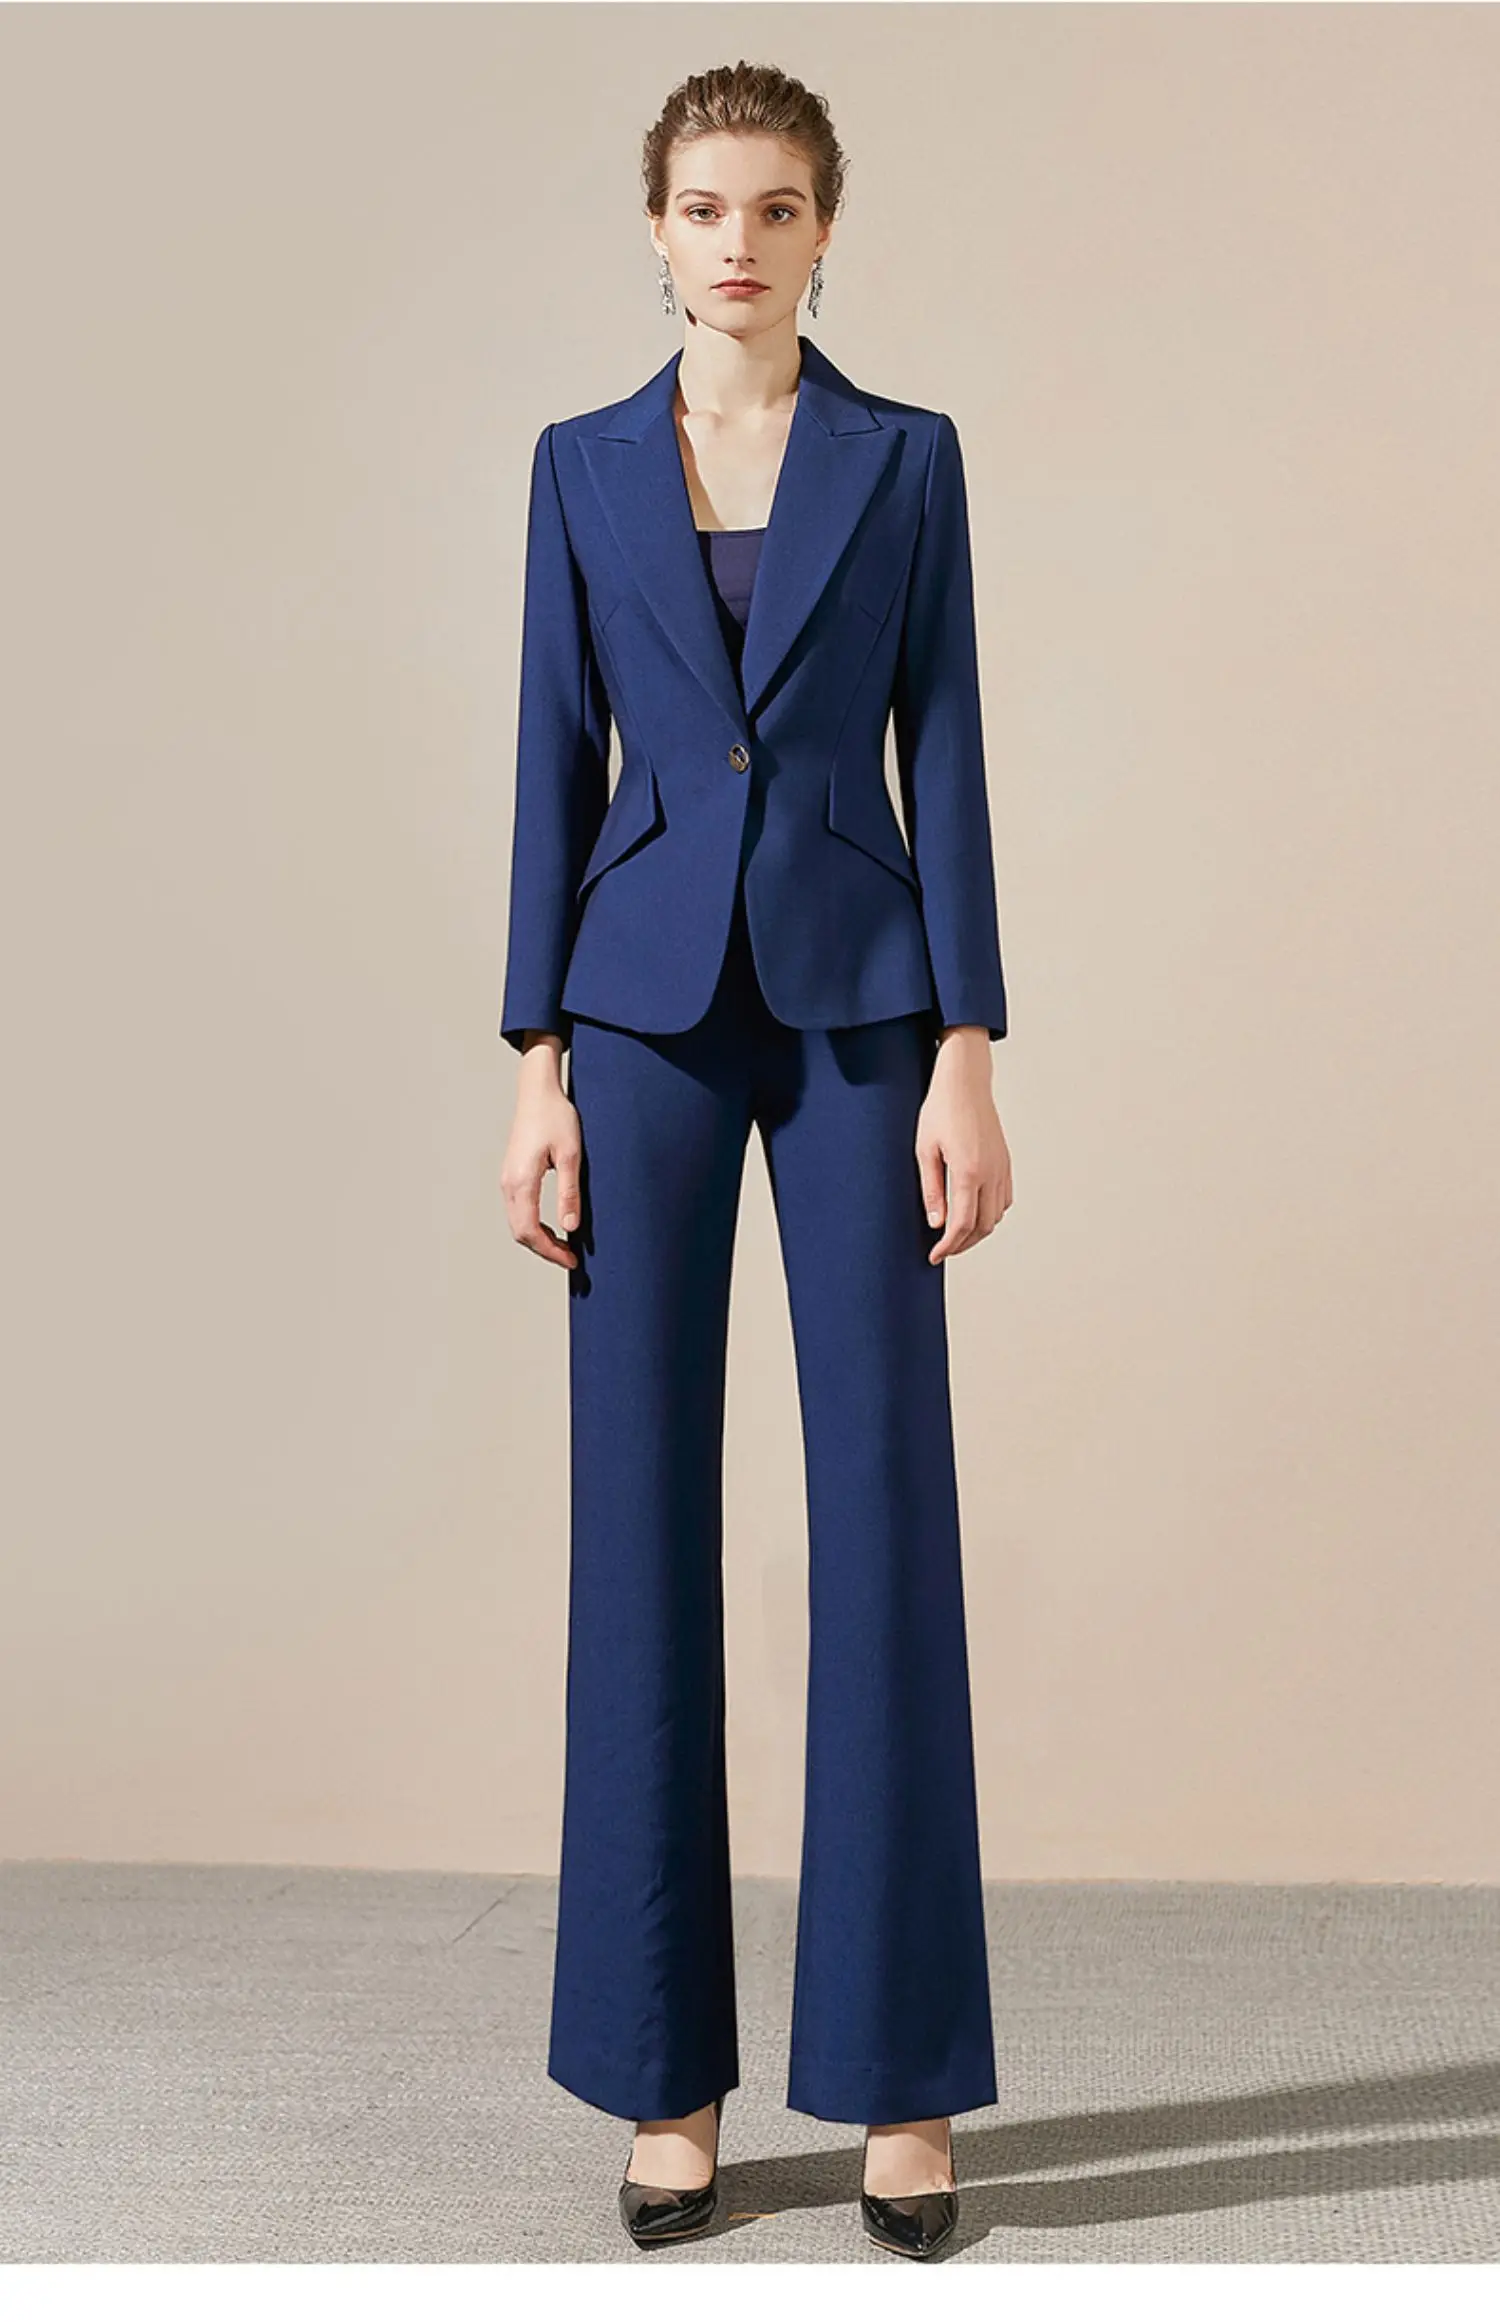 Navy blue suit suit women's formal wear light luxury complete set of casual wear female suit host ol British position